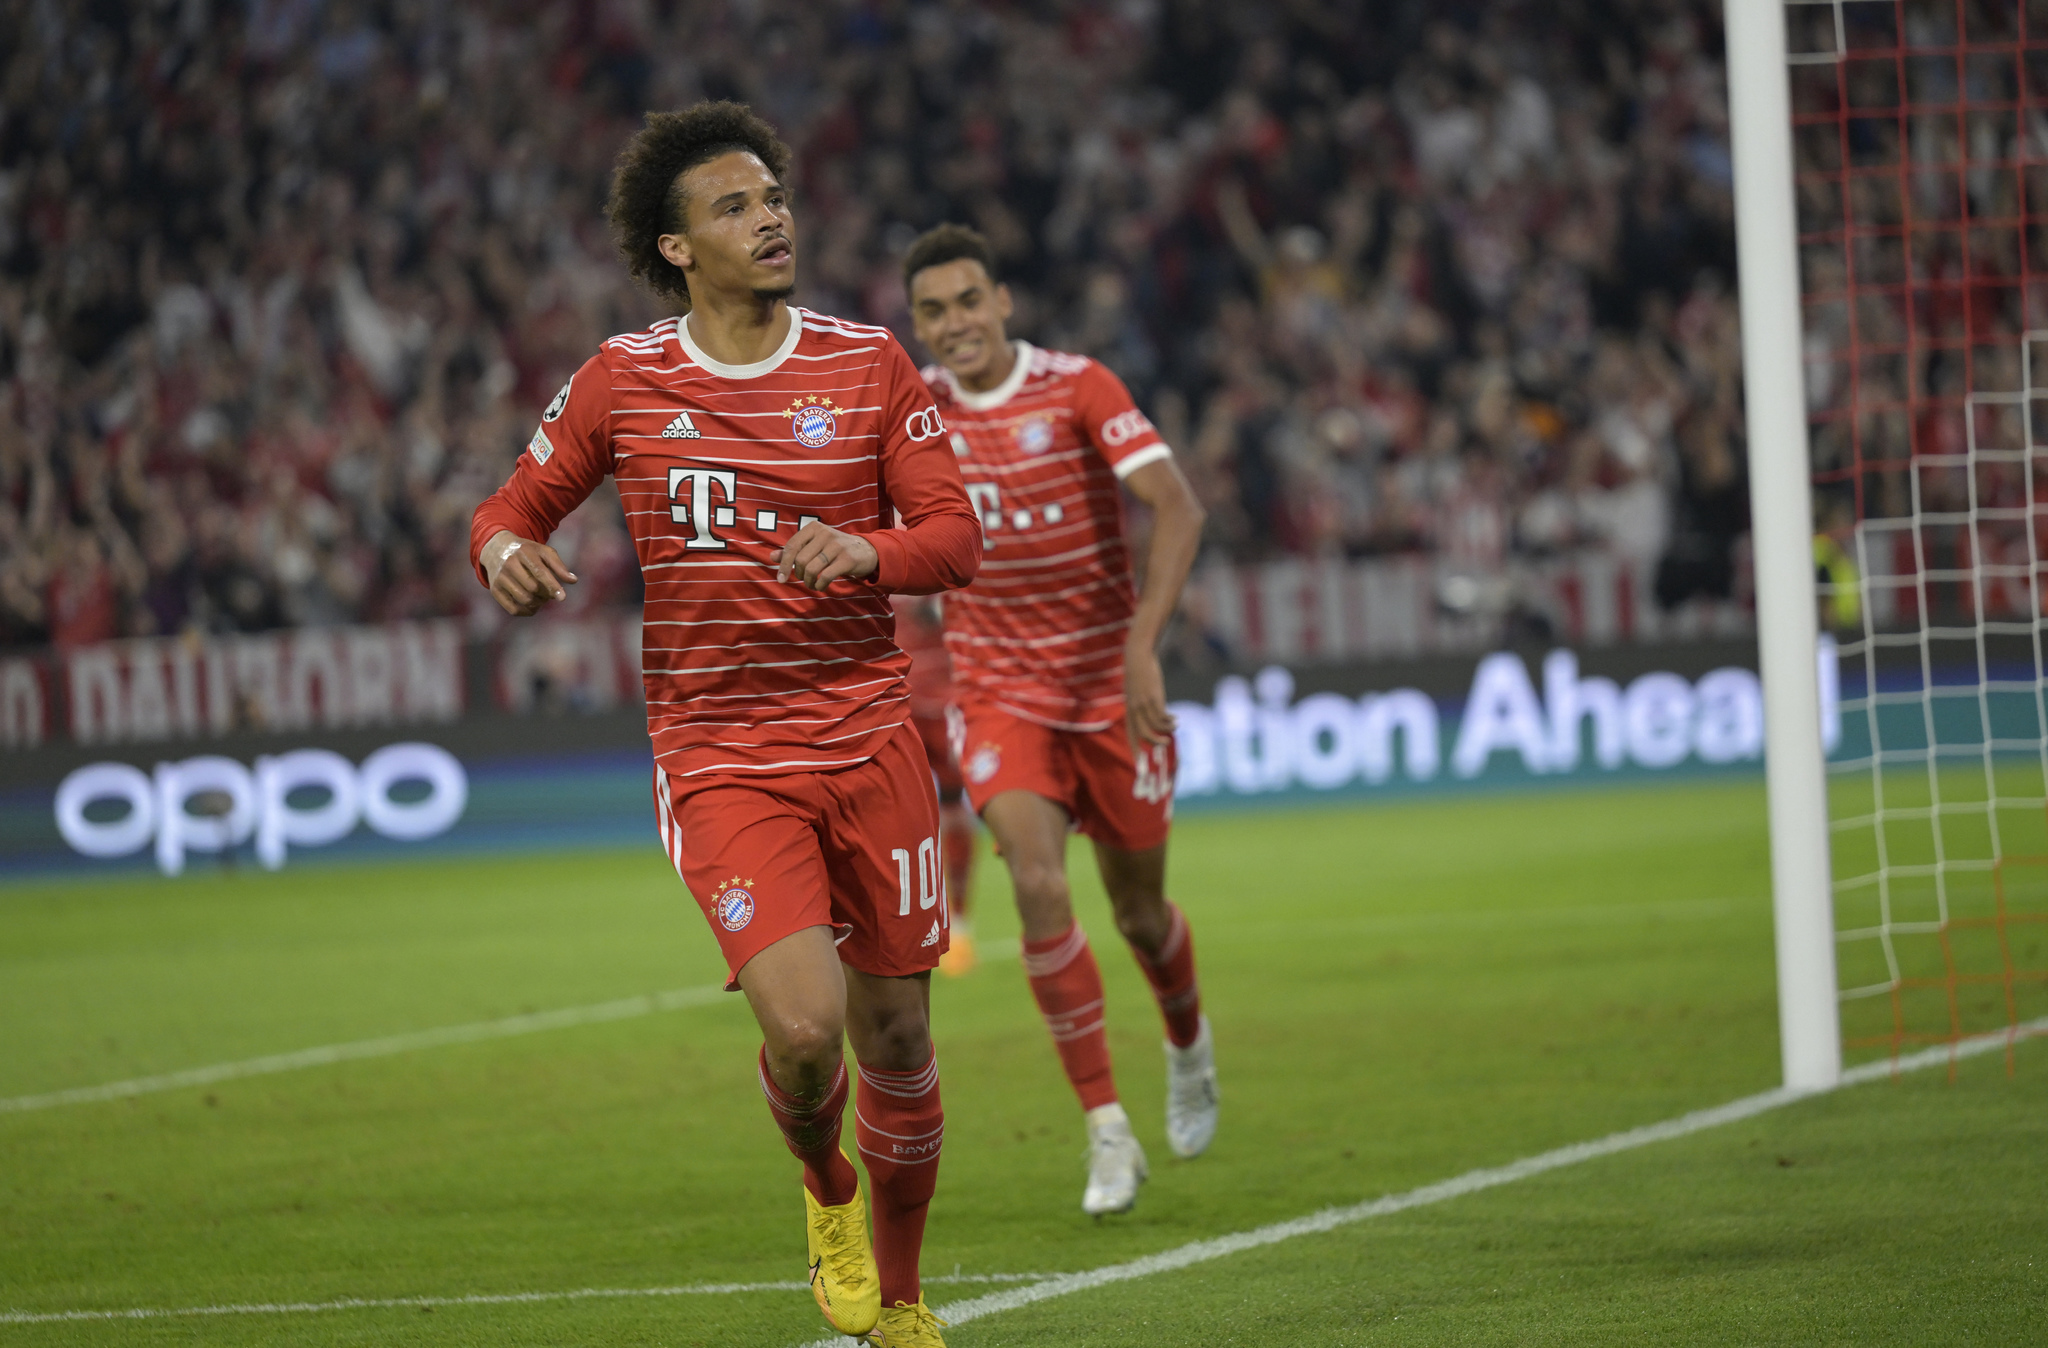 Bayern's Leroy Sane celebrates after scoring his side's second goal